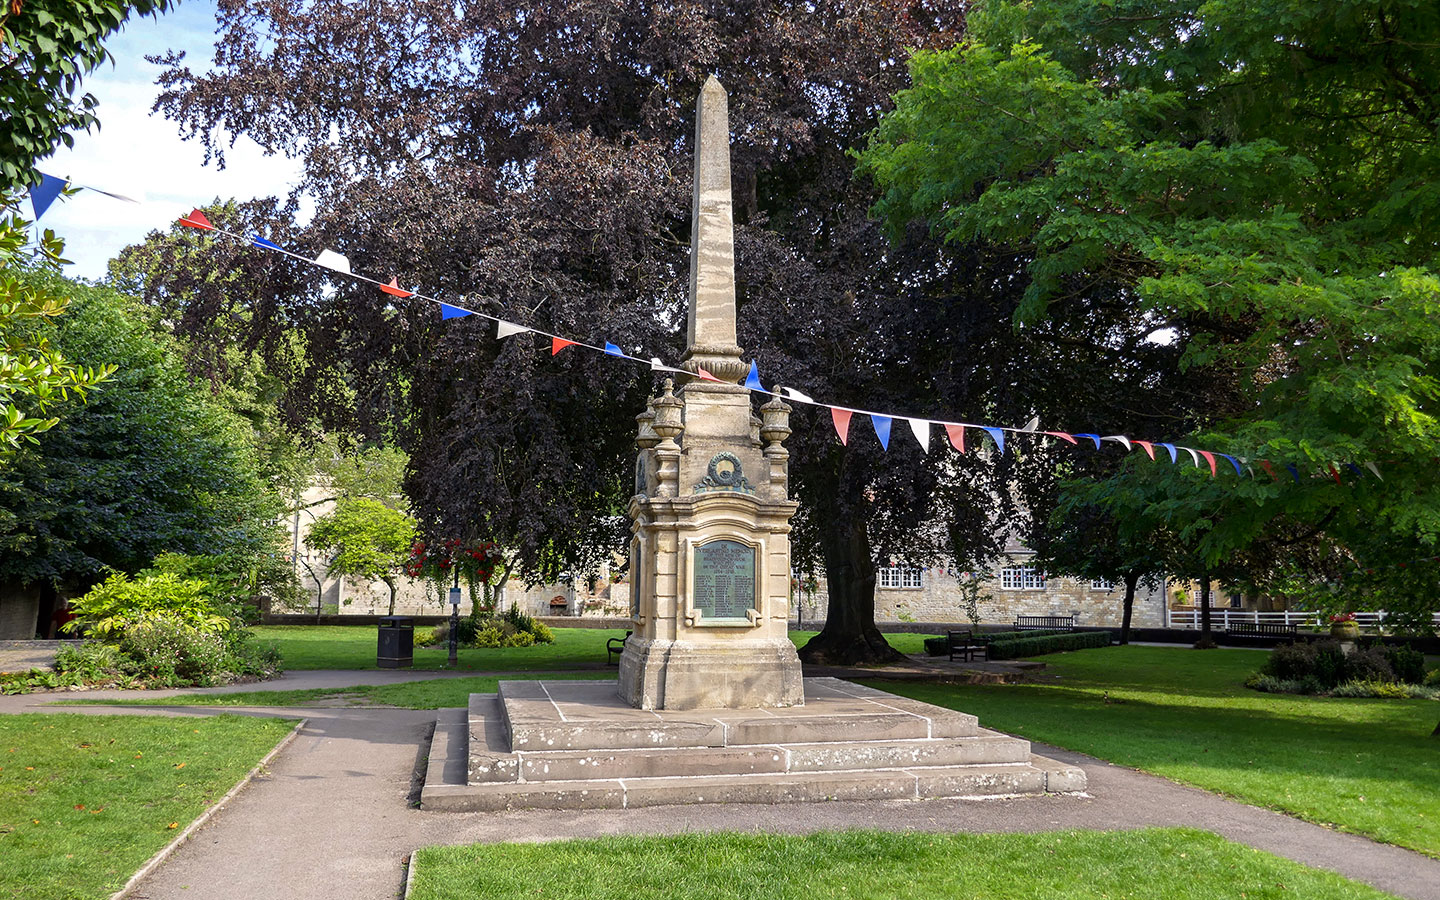 Bradford on Avon's war memorial